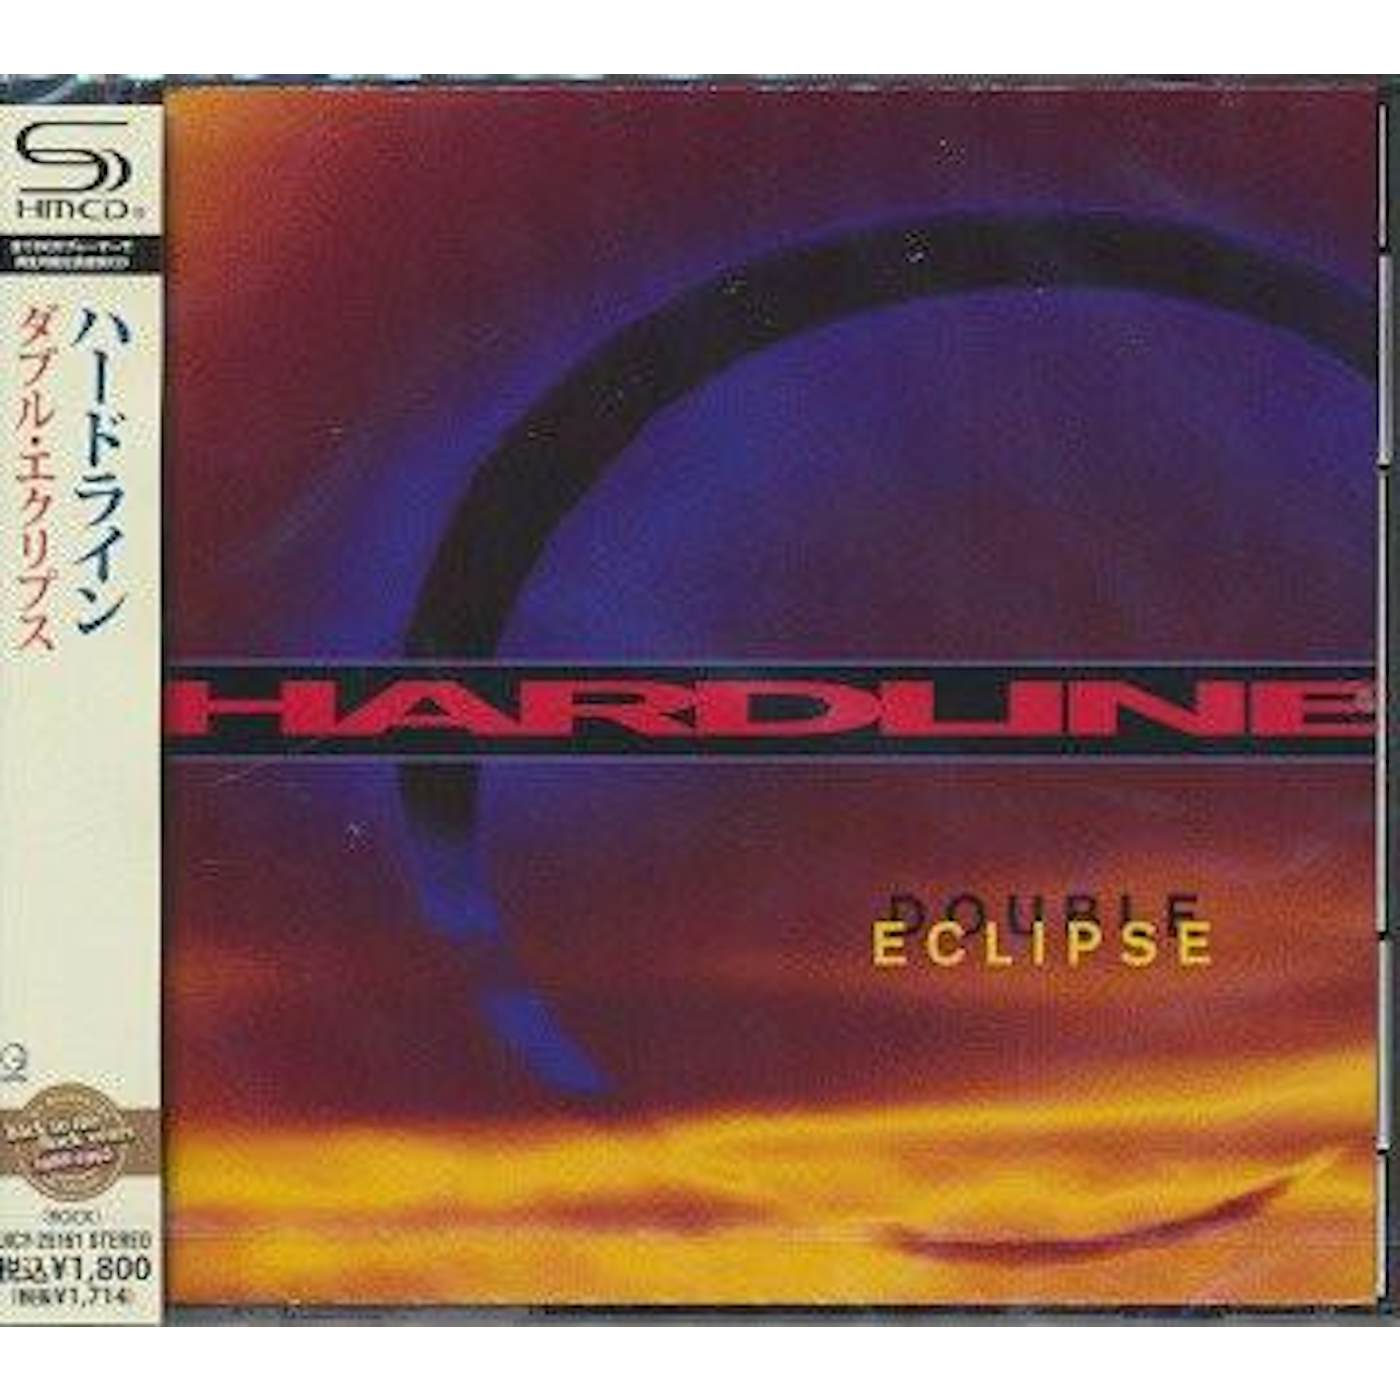 Hardline DOUBLE ECLIPSE CD